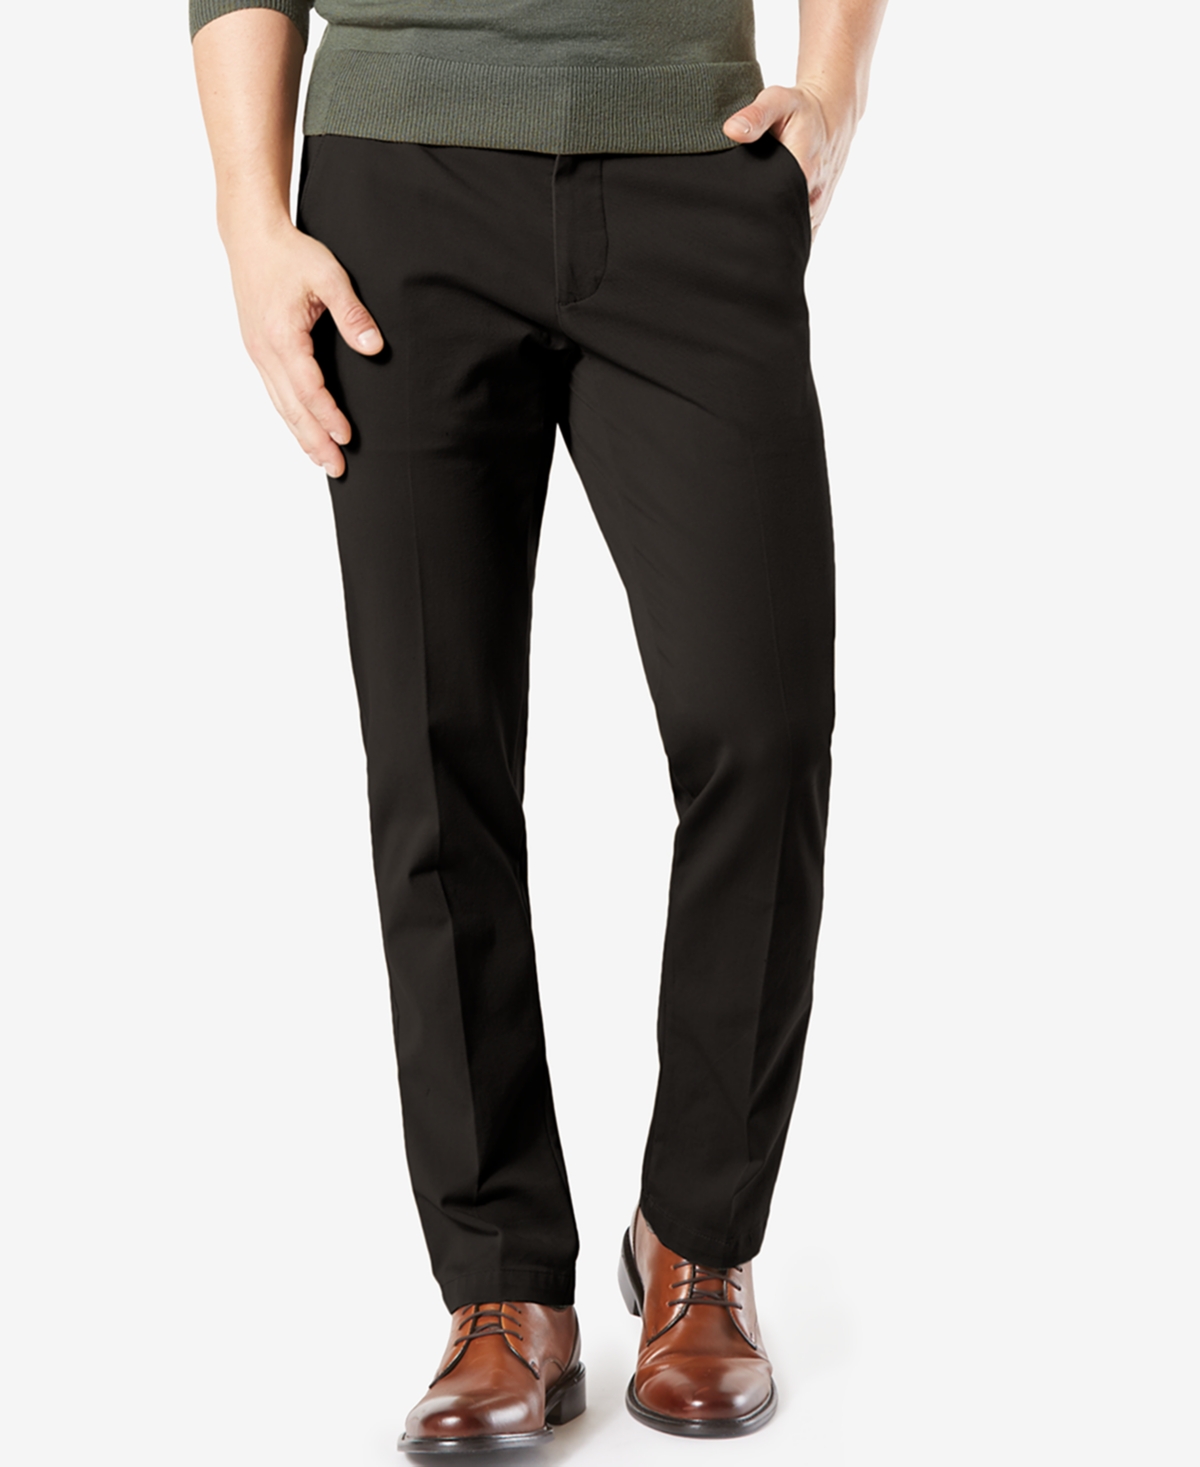 Men's Workday Smart 360 Flex Straight Fit Khaki Stretch Pants - Black